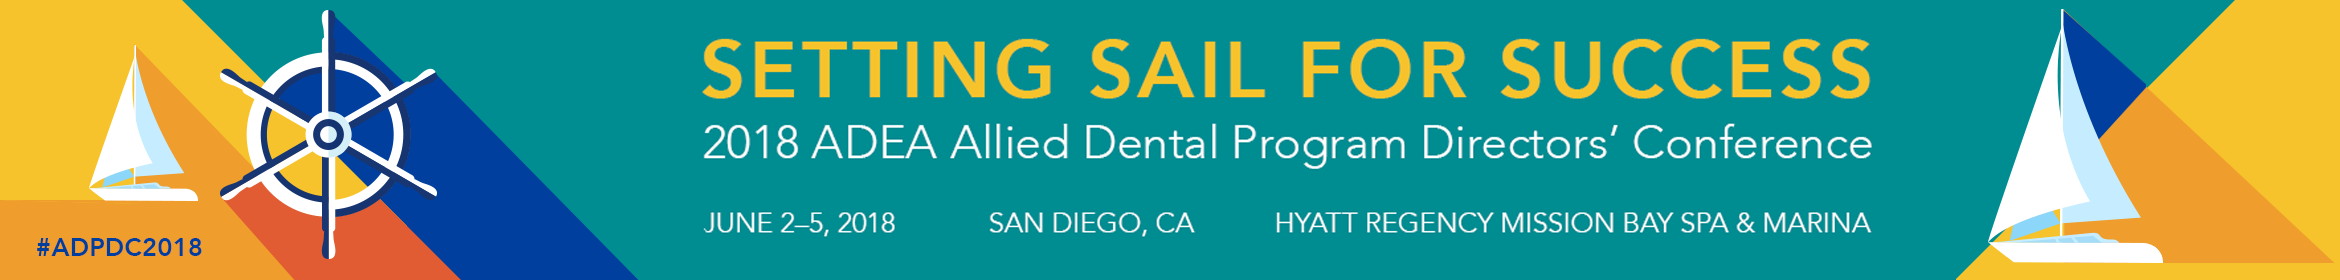 2018 ADEA Allied Dental Program Directors